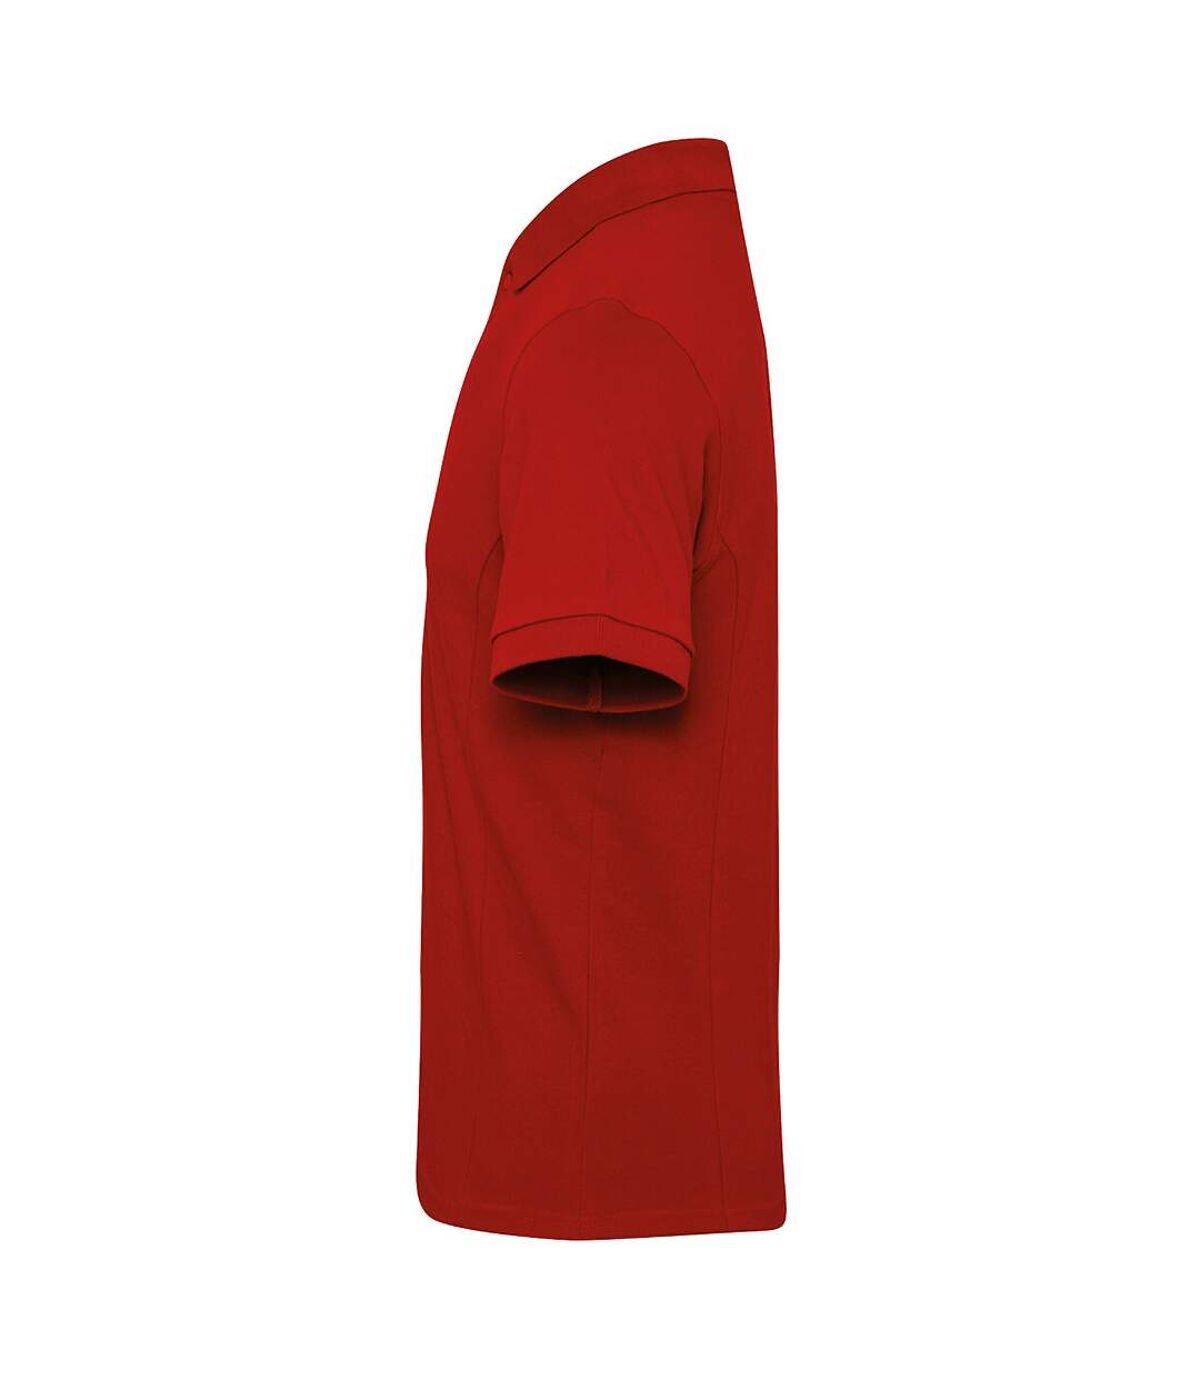 Premier - T-shirt POLO - Hommes (Rouge) - UTPC3374